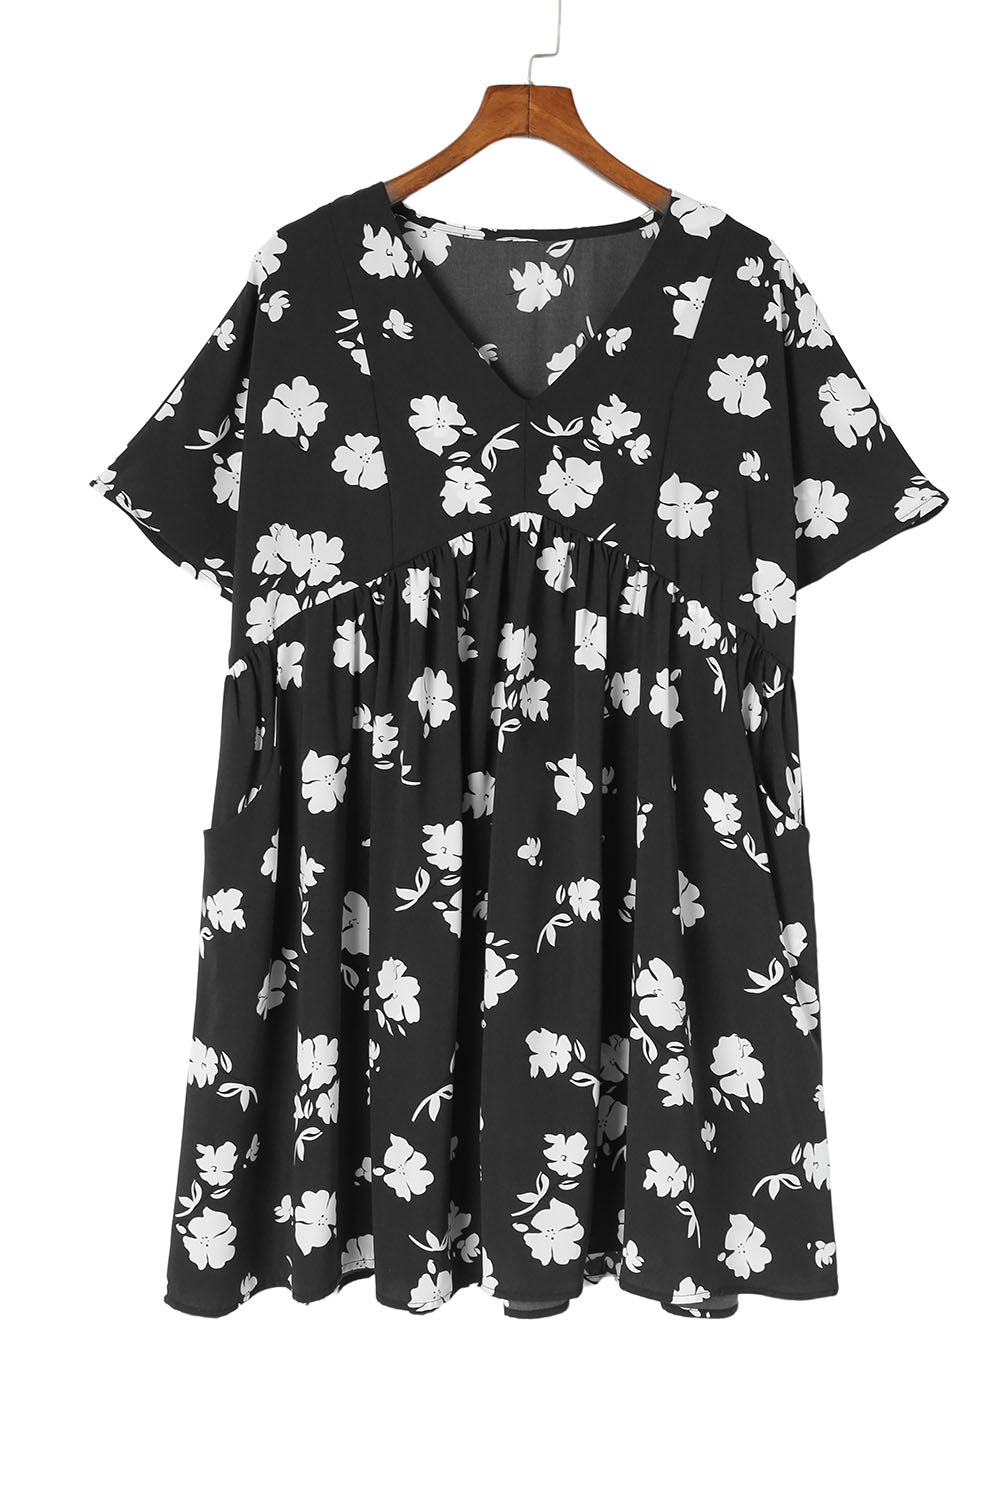 Black Floral Print V Neck Empire Waist Dress With Pockets